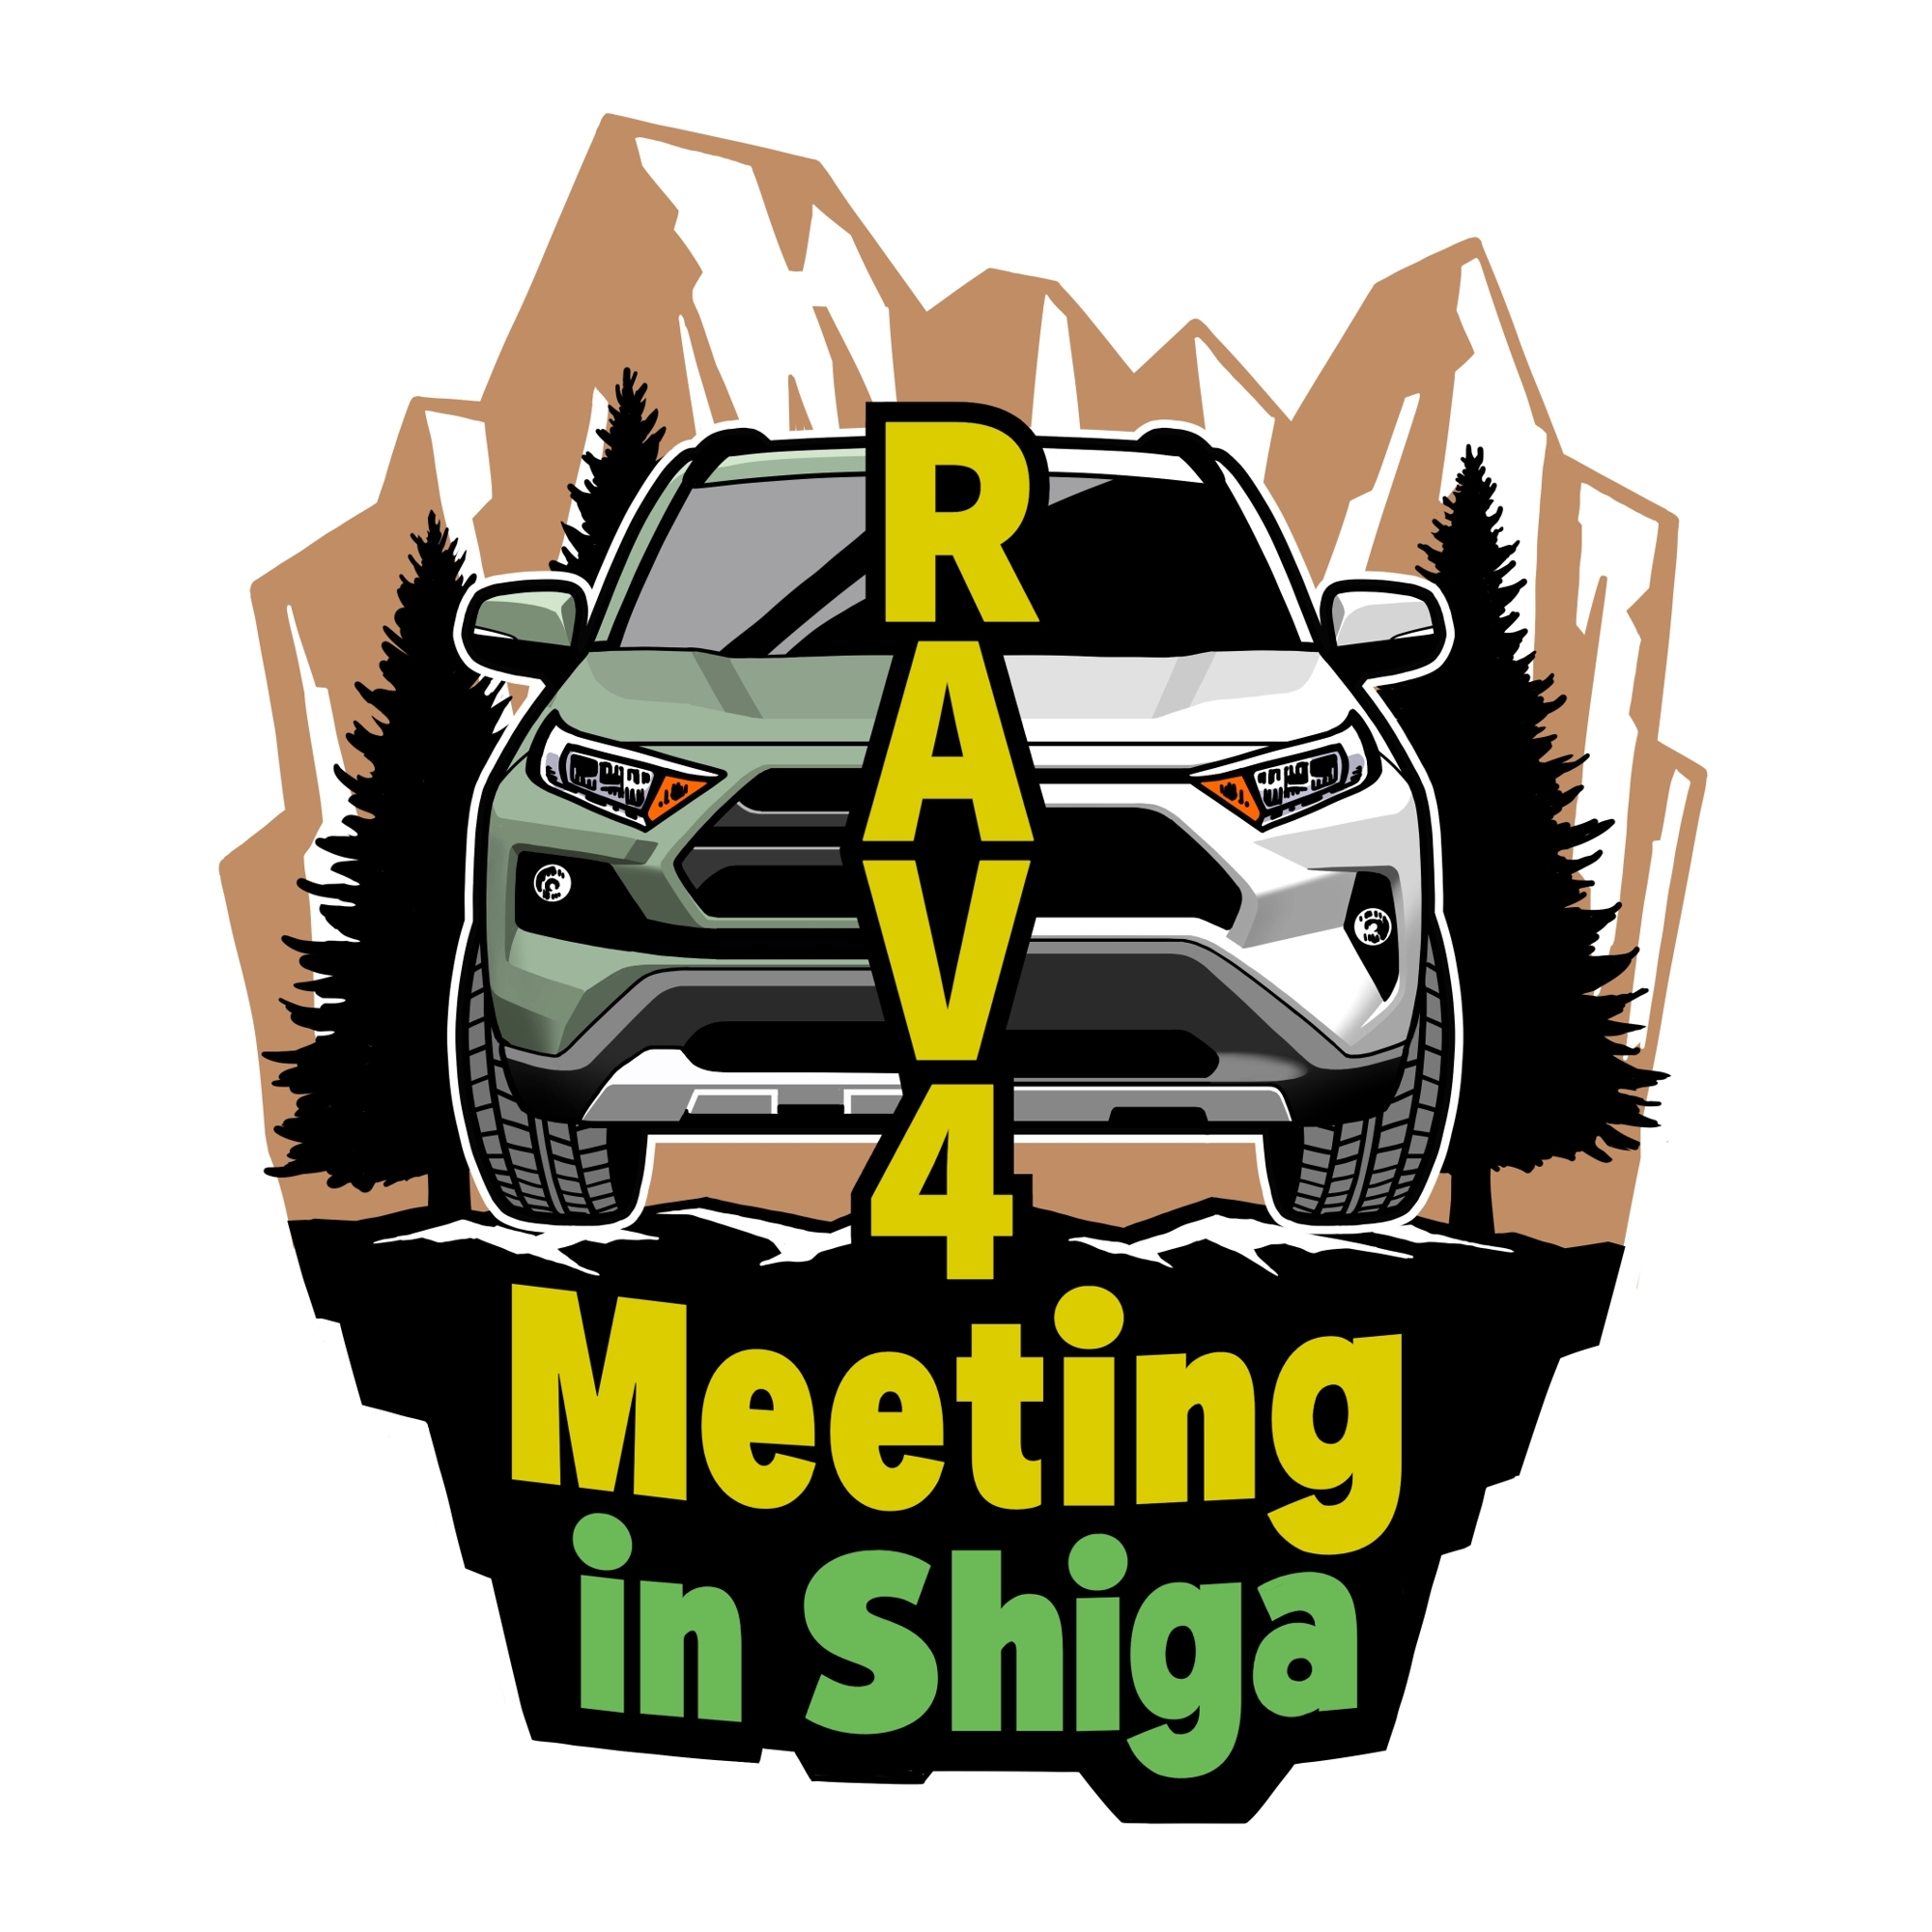 RAV4 meeting in ShigaHIDoW